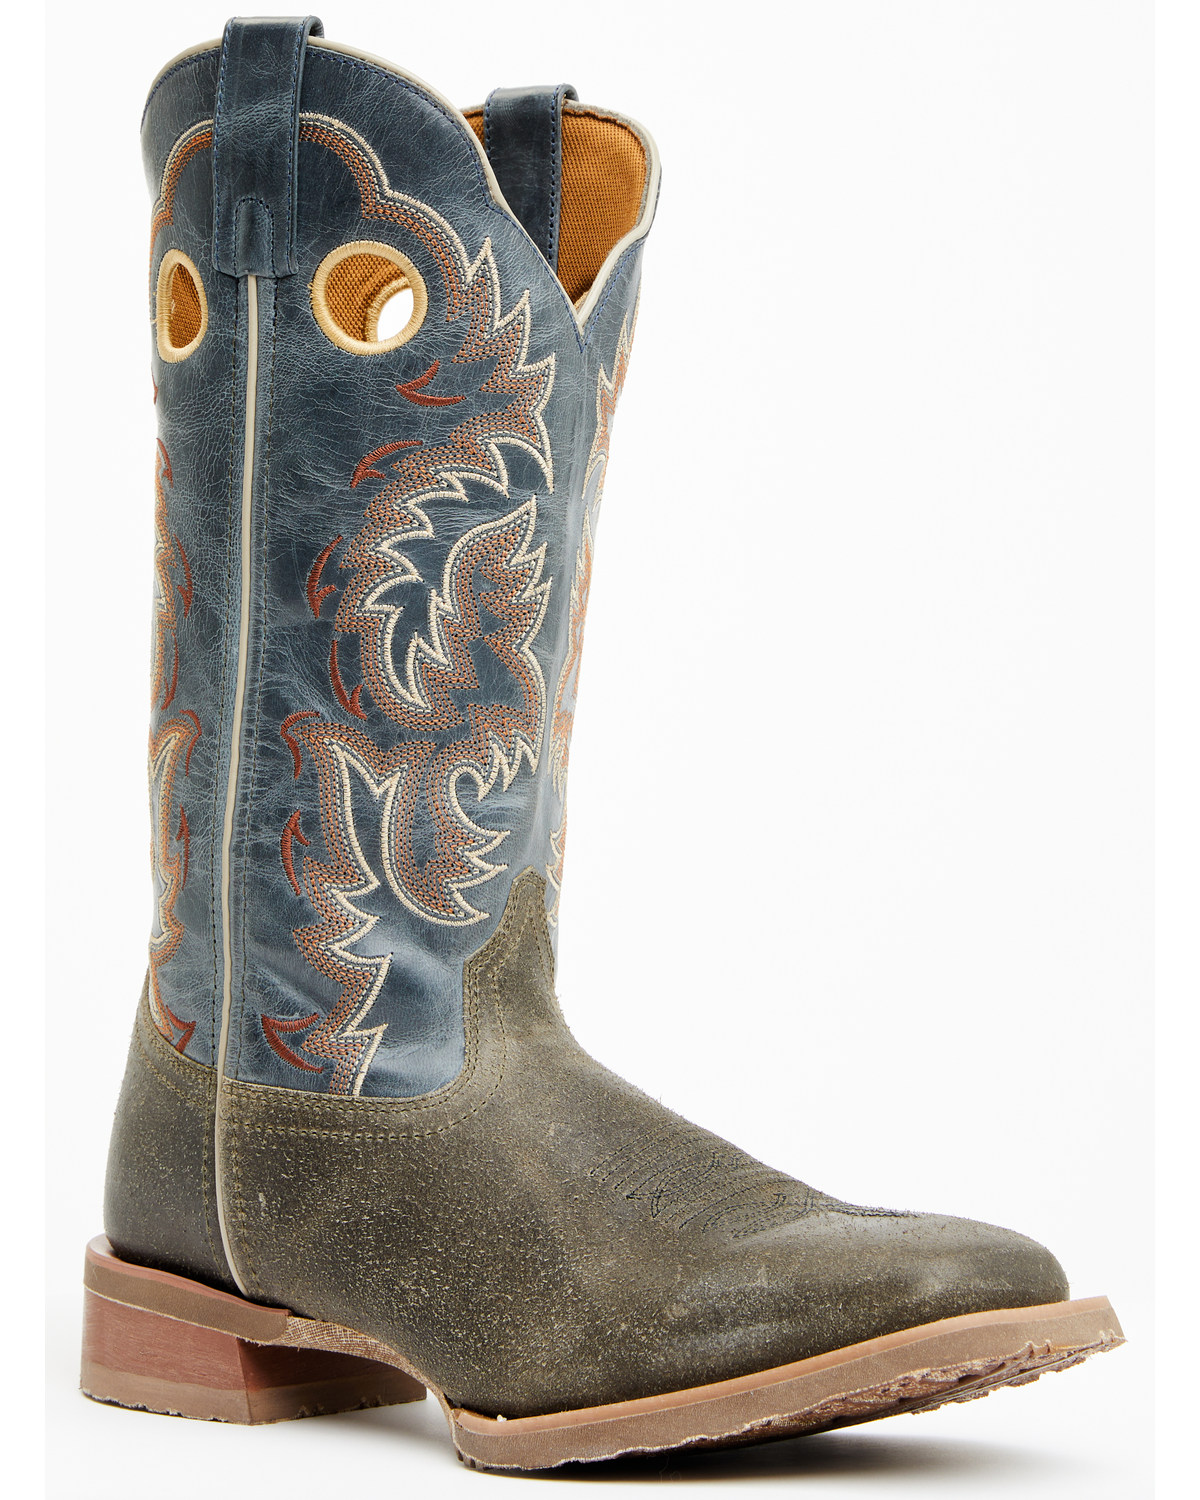 Laredo Men's Peete Western Boots - Broad Square Toe